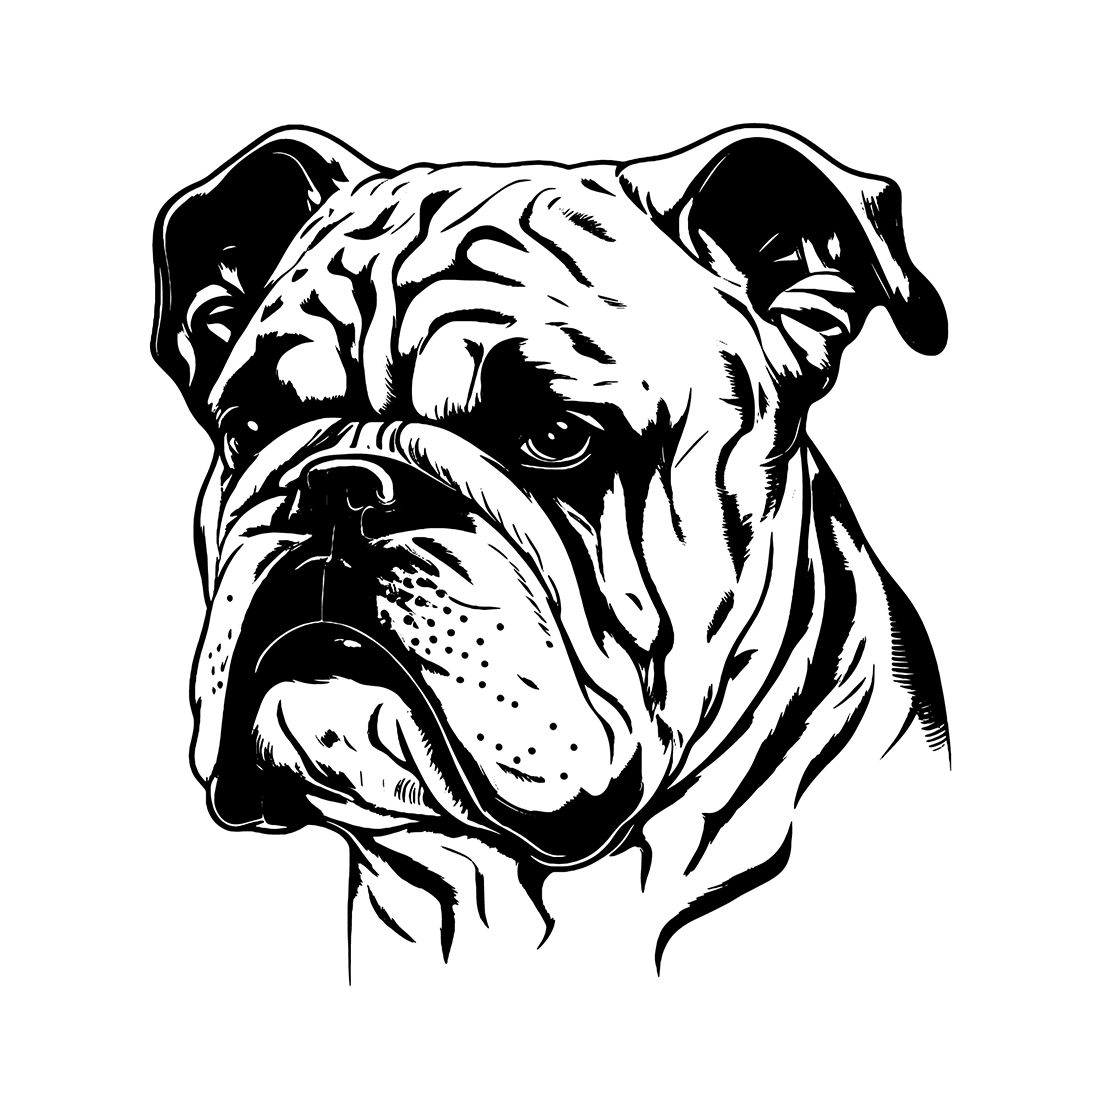 A Bulldog logo Illustration cover image.